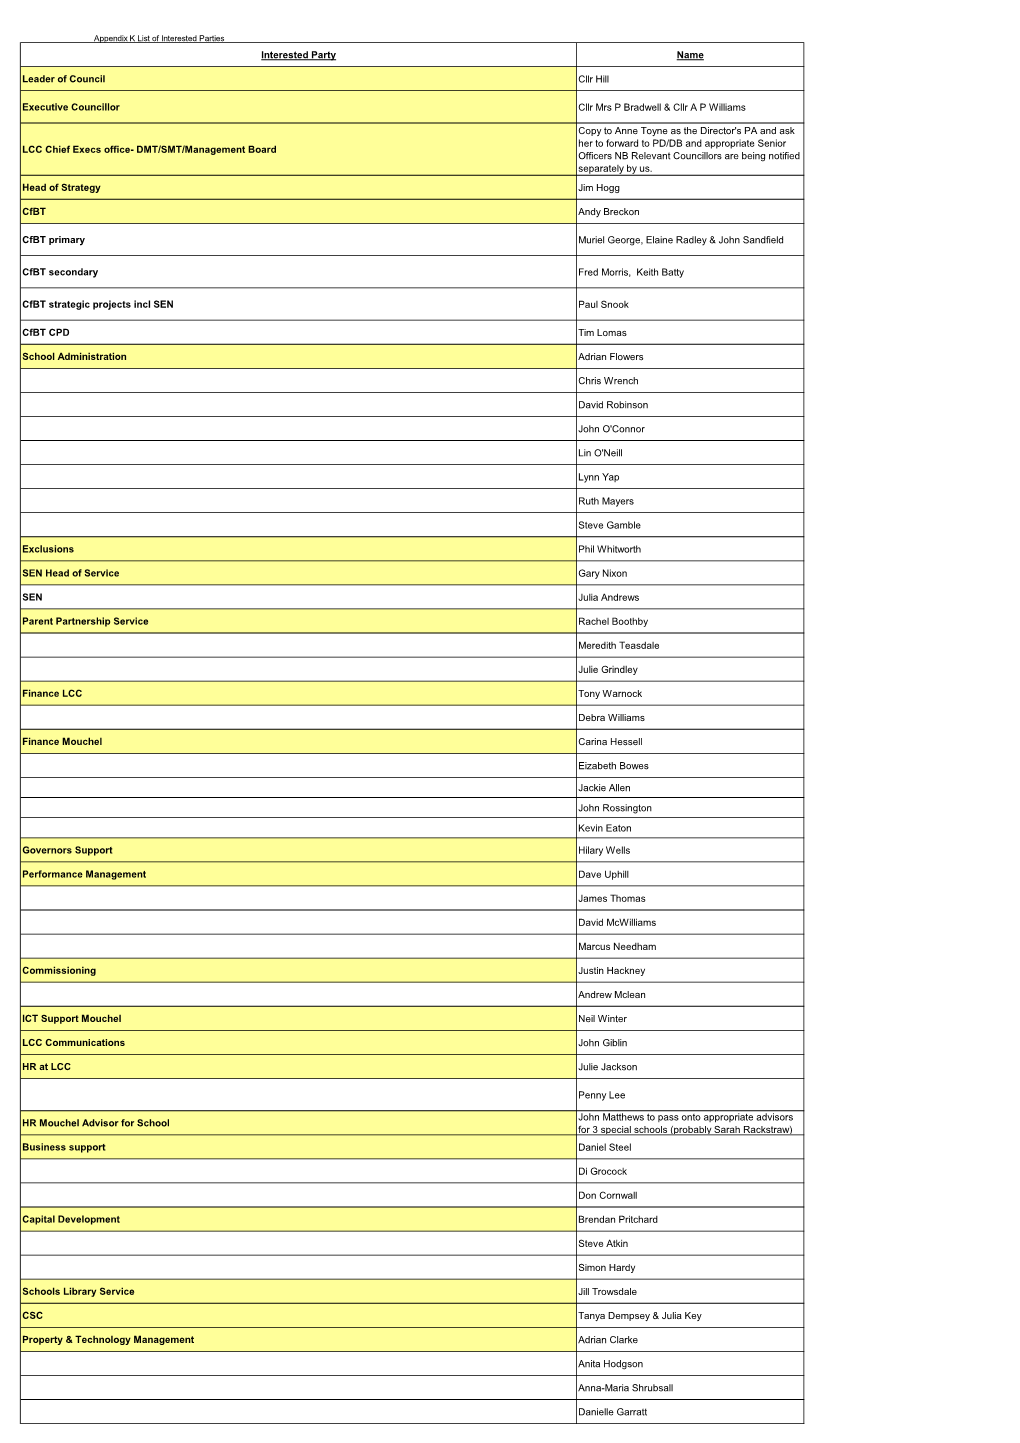 Appendix E List of Interested Parties